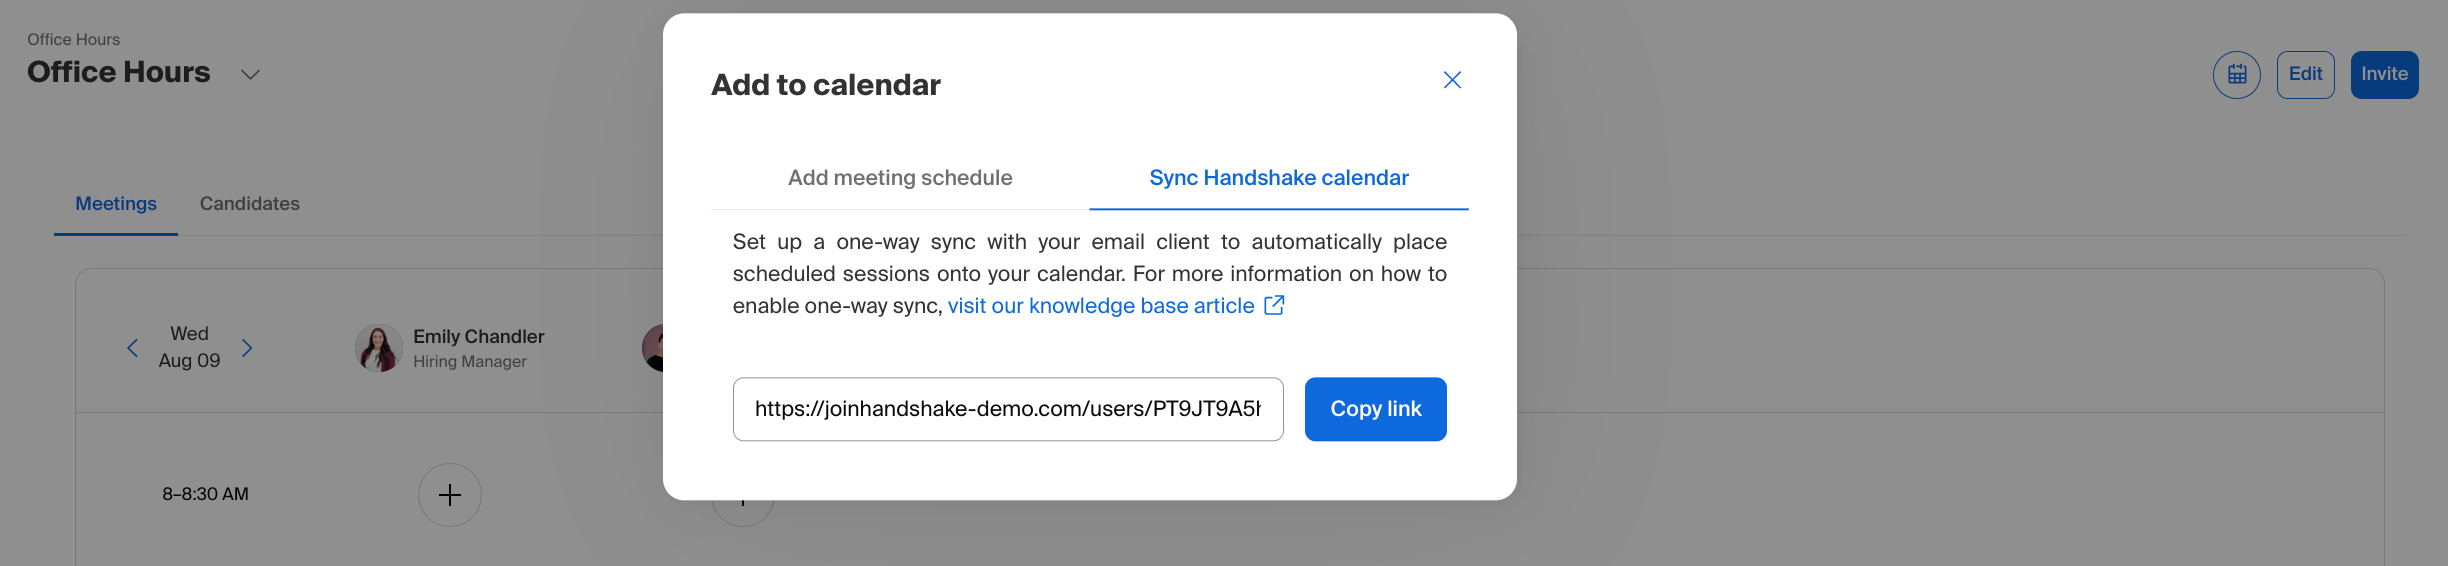 Select sync handshake calendar.png